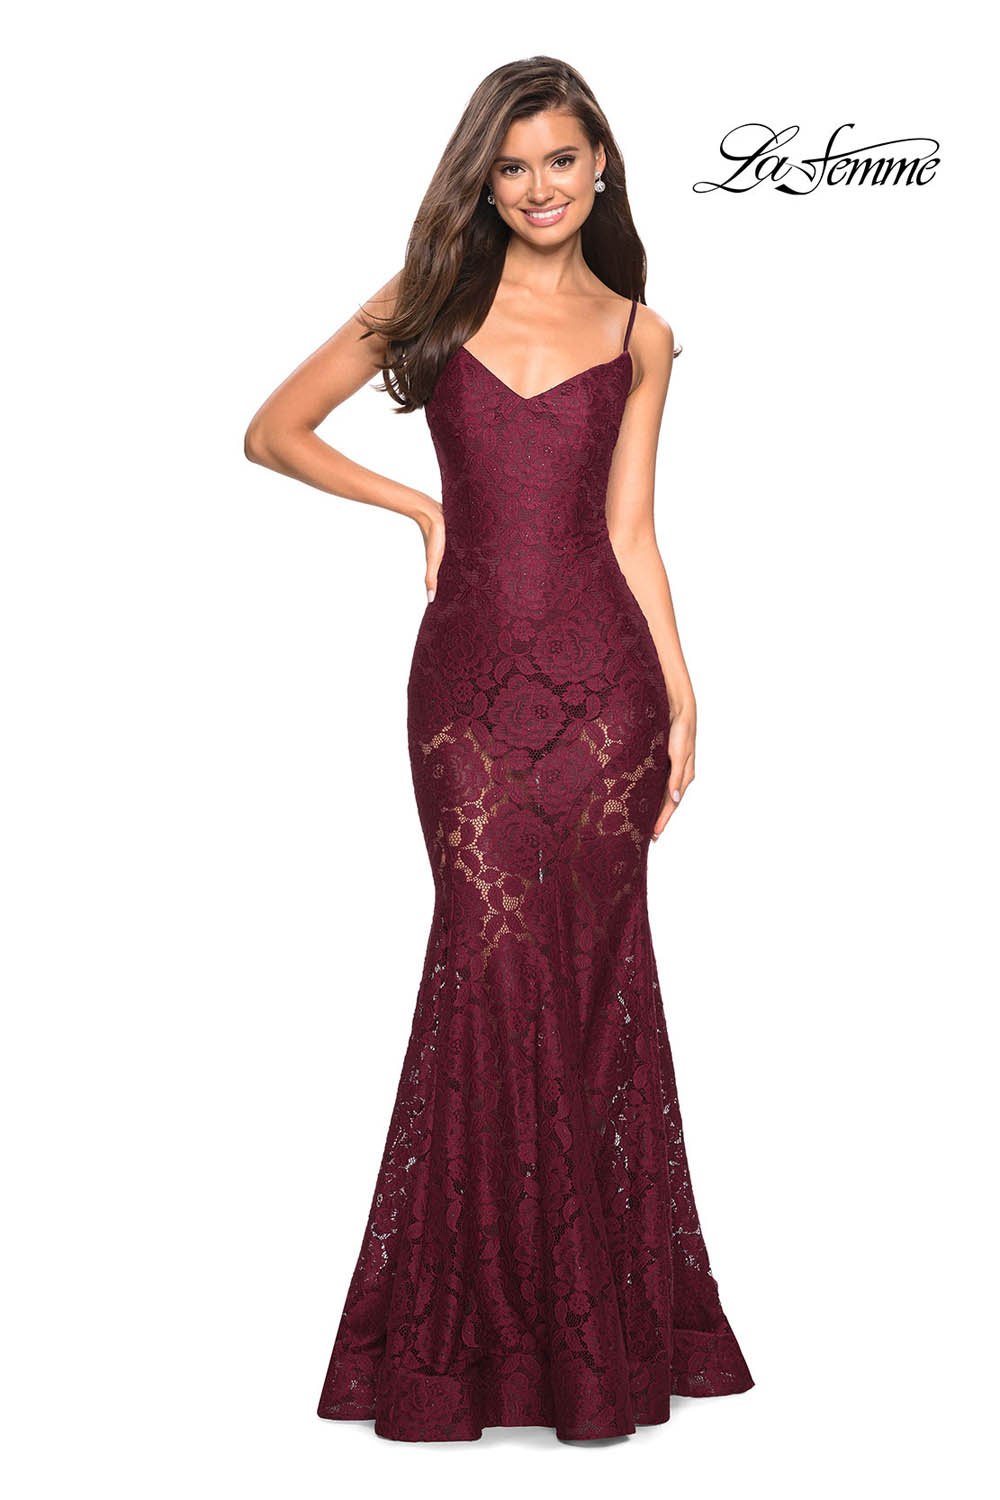 La Femme 27584 Dress